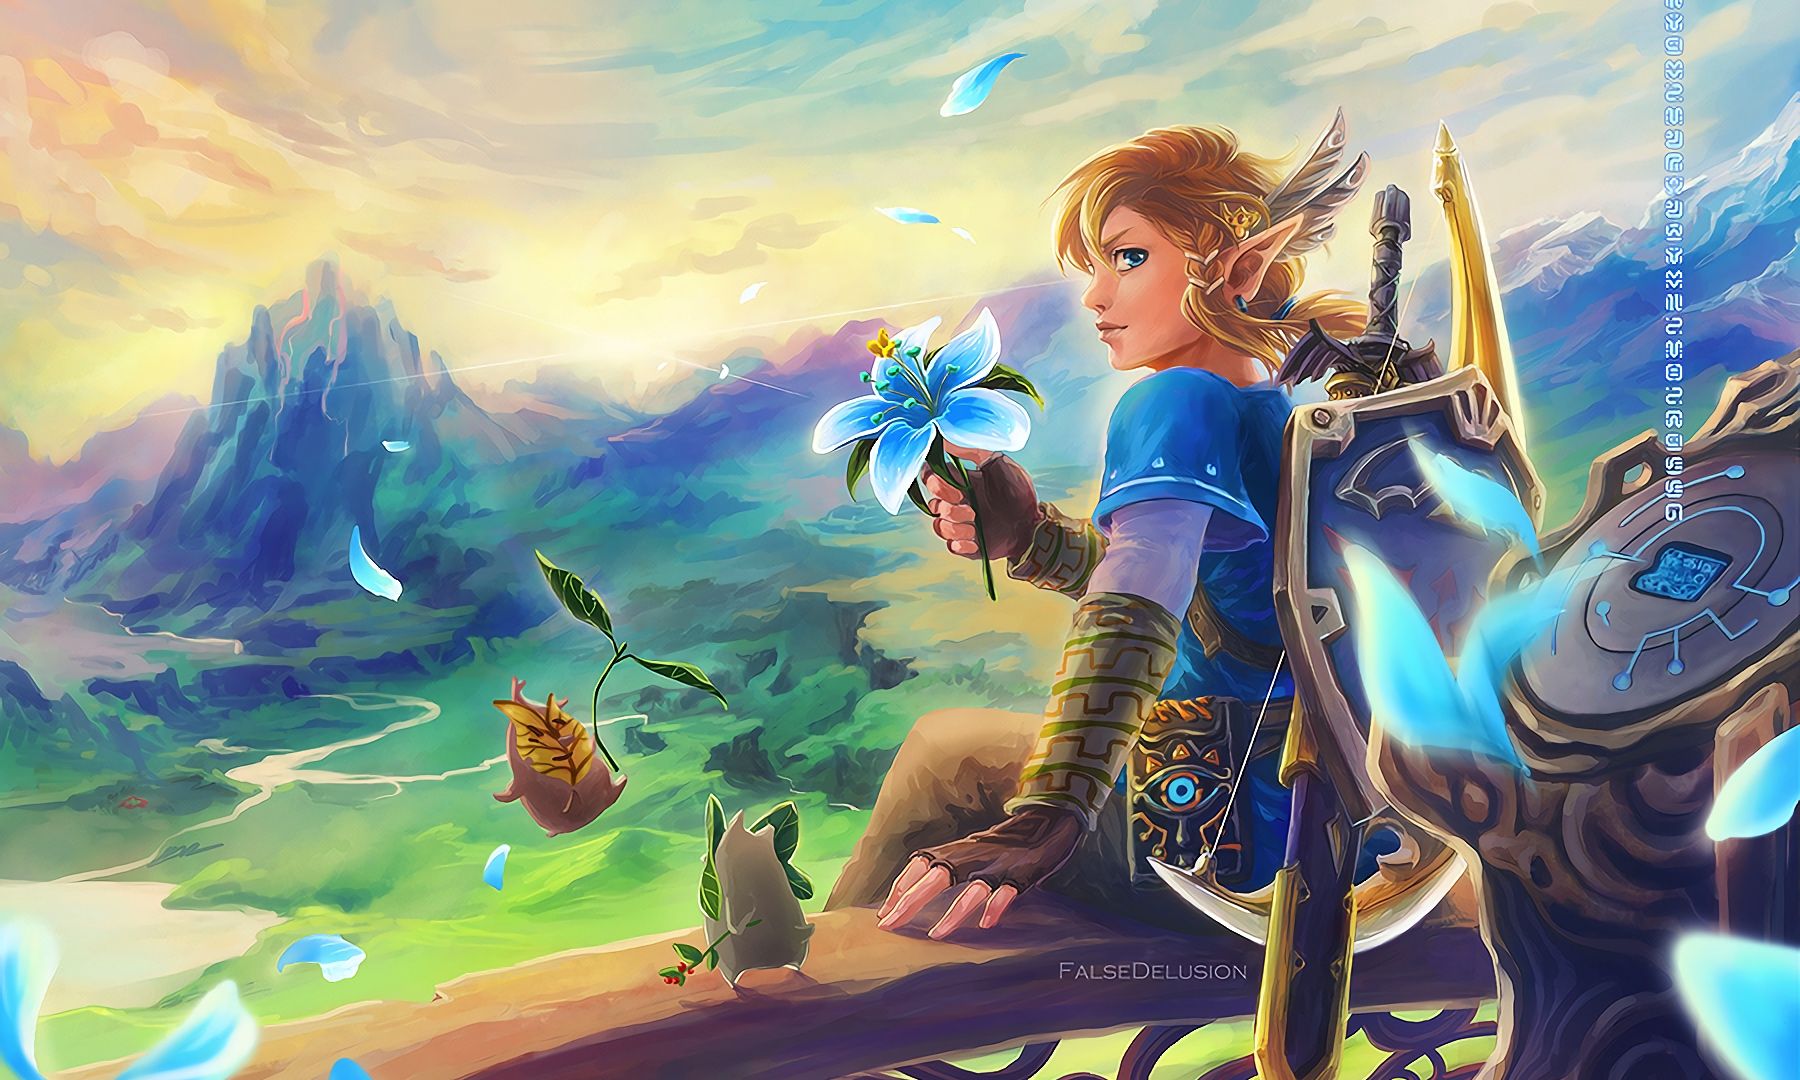 Wallpaper The Legend of Zelda: Breath of the Wild, 2017 game, video game, art, link, warrior